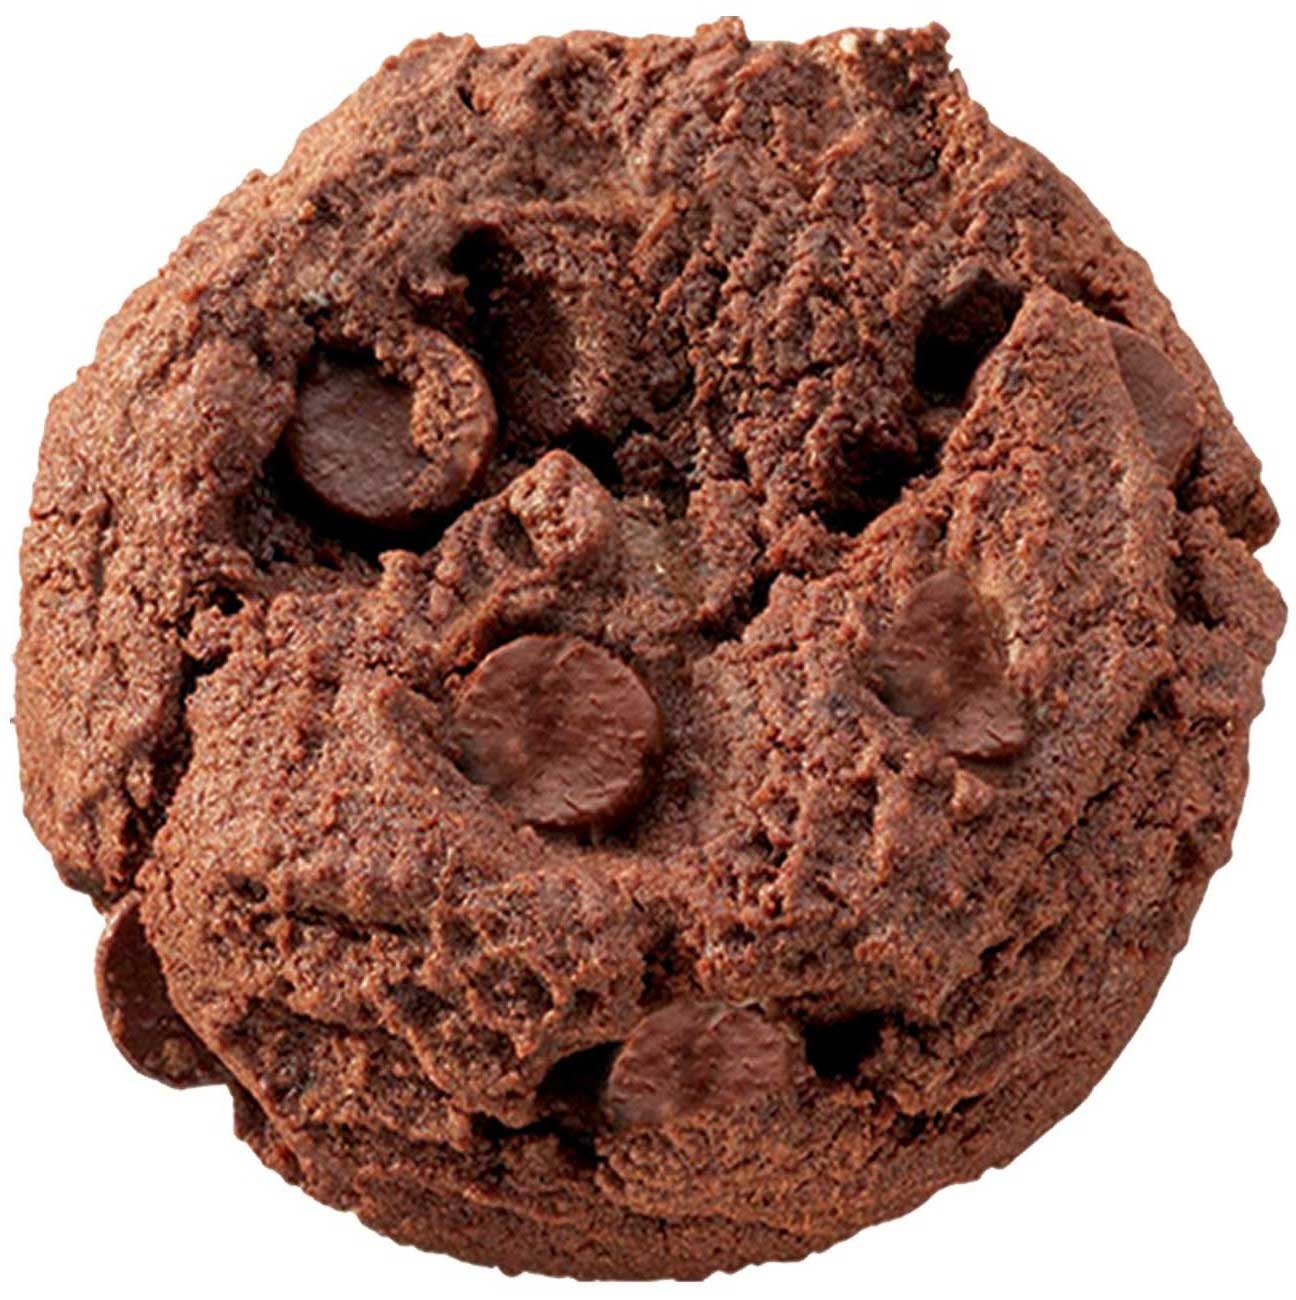 Readi-Bake Double Chocolate Cookie Dough, 1.25 Ounce -- 288 per case